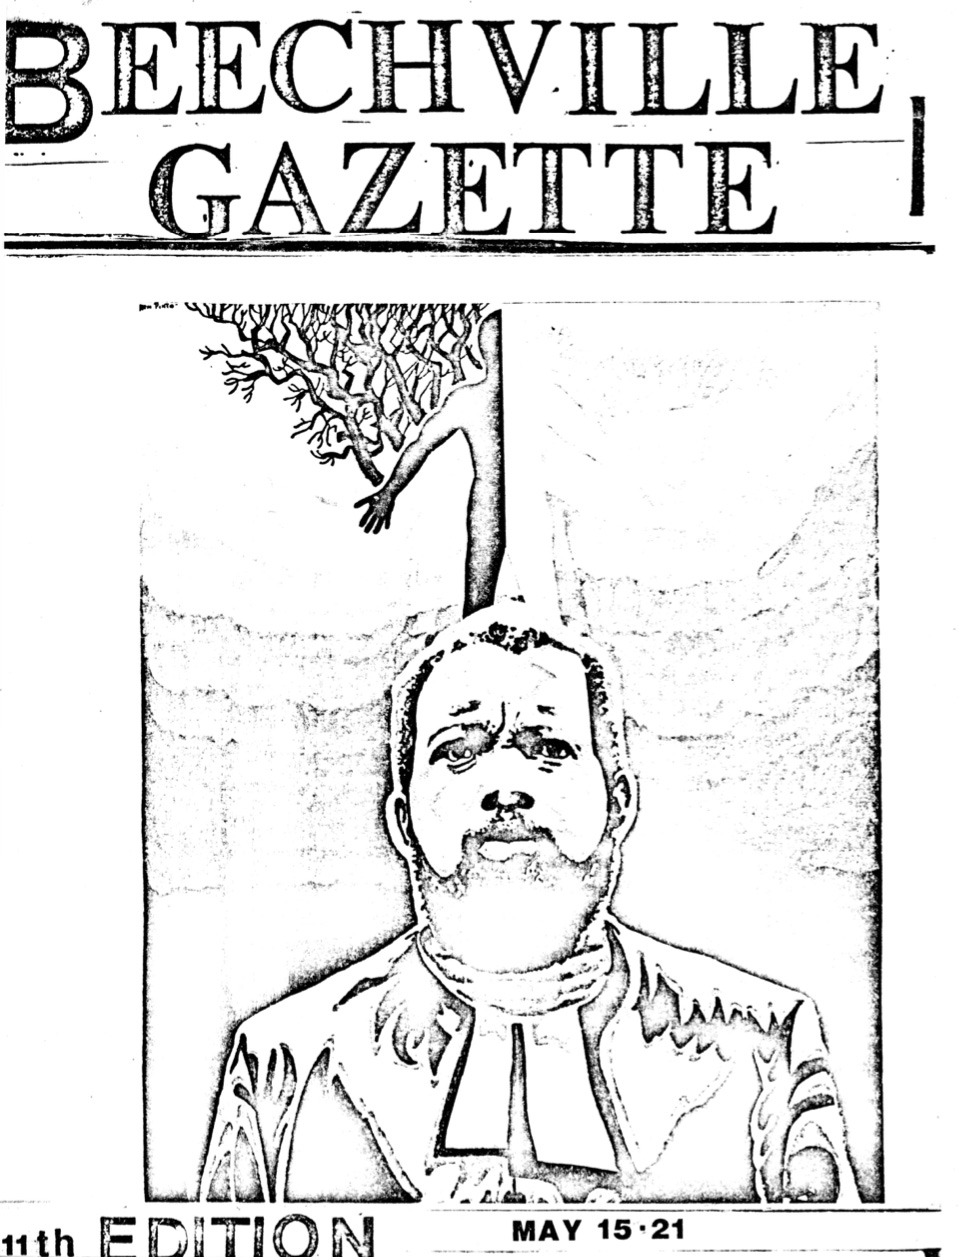 african-heritage : Beechville Gazette